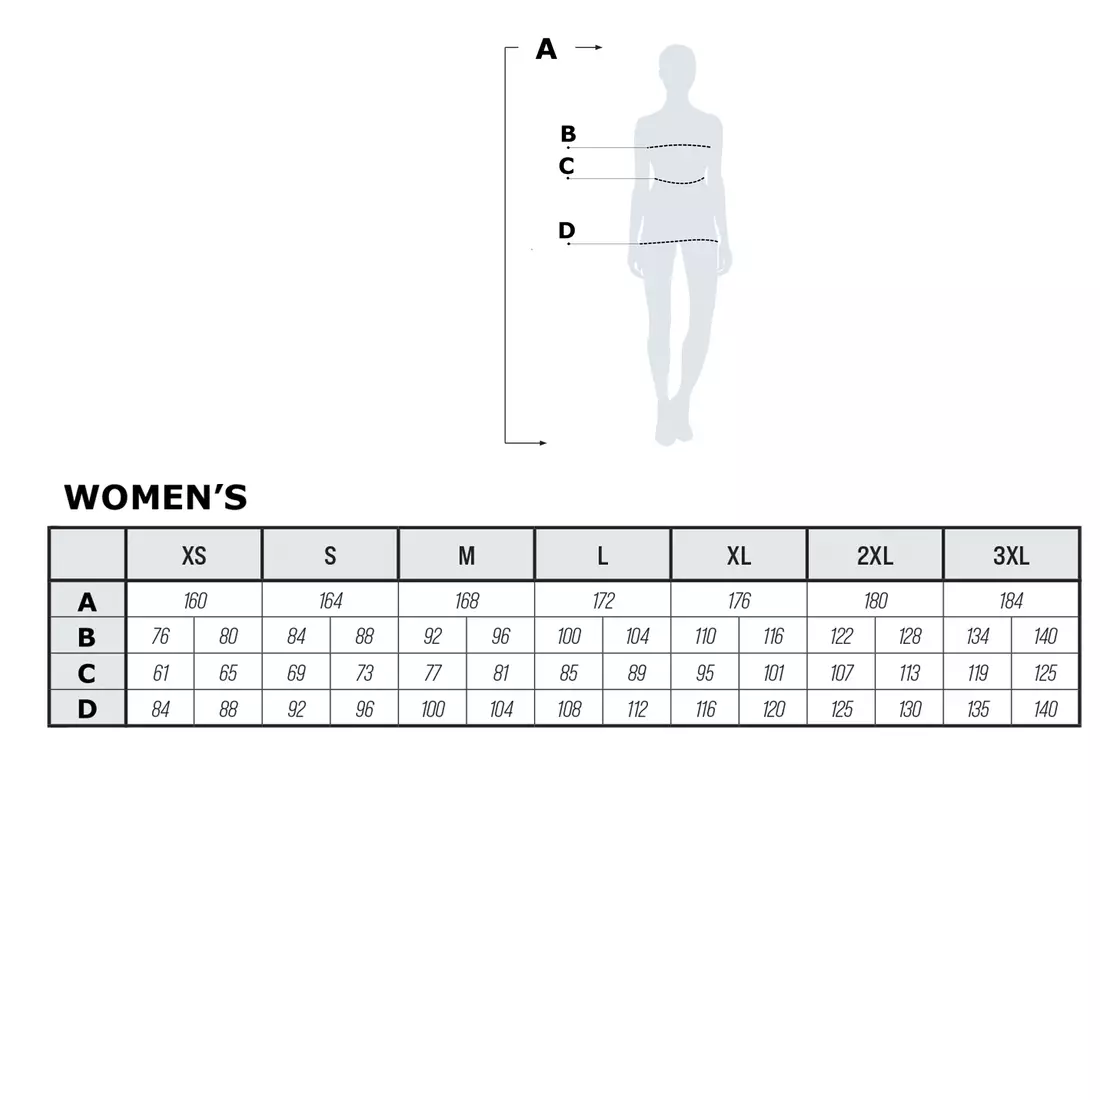 MALFINI FANTASY - Women's Sports T-Shirt 100% Polyester, White 1400012-140